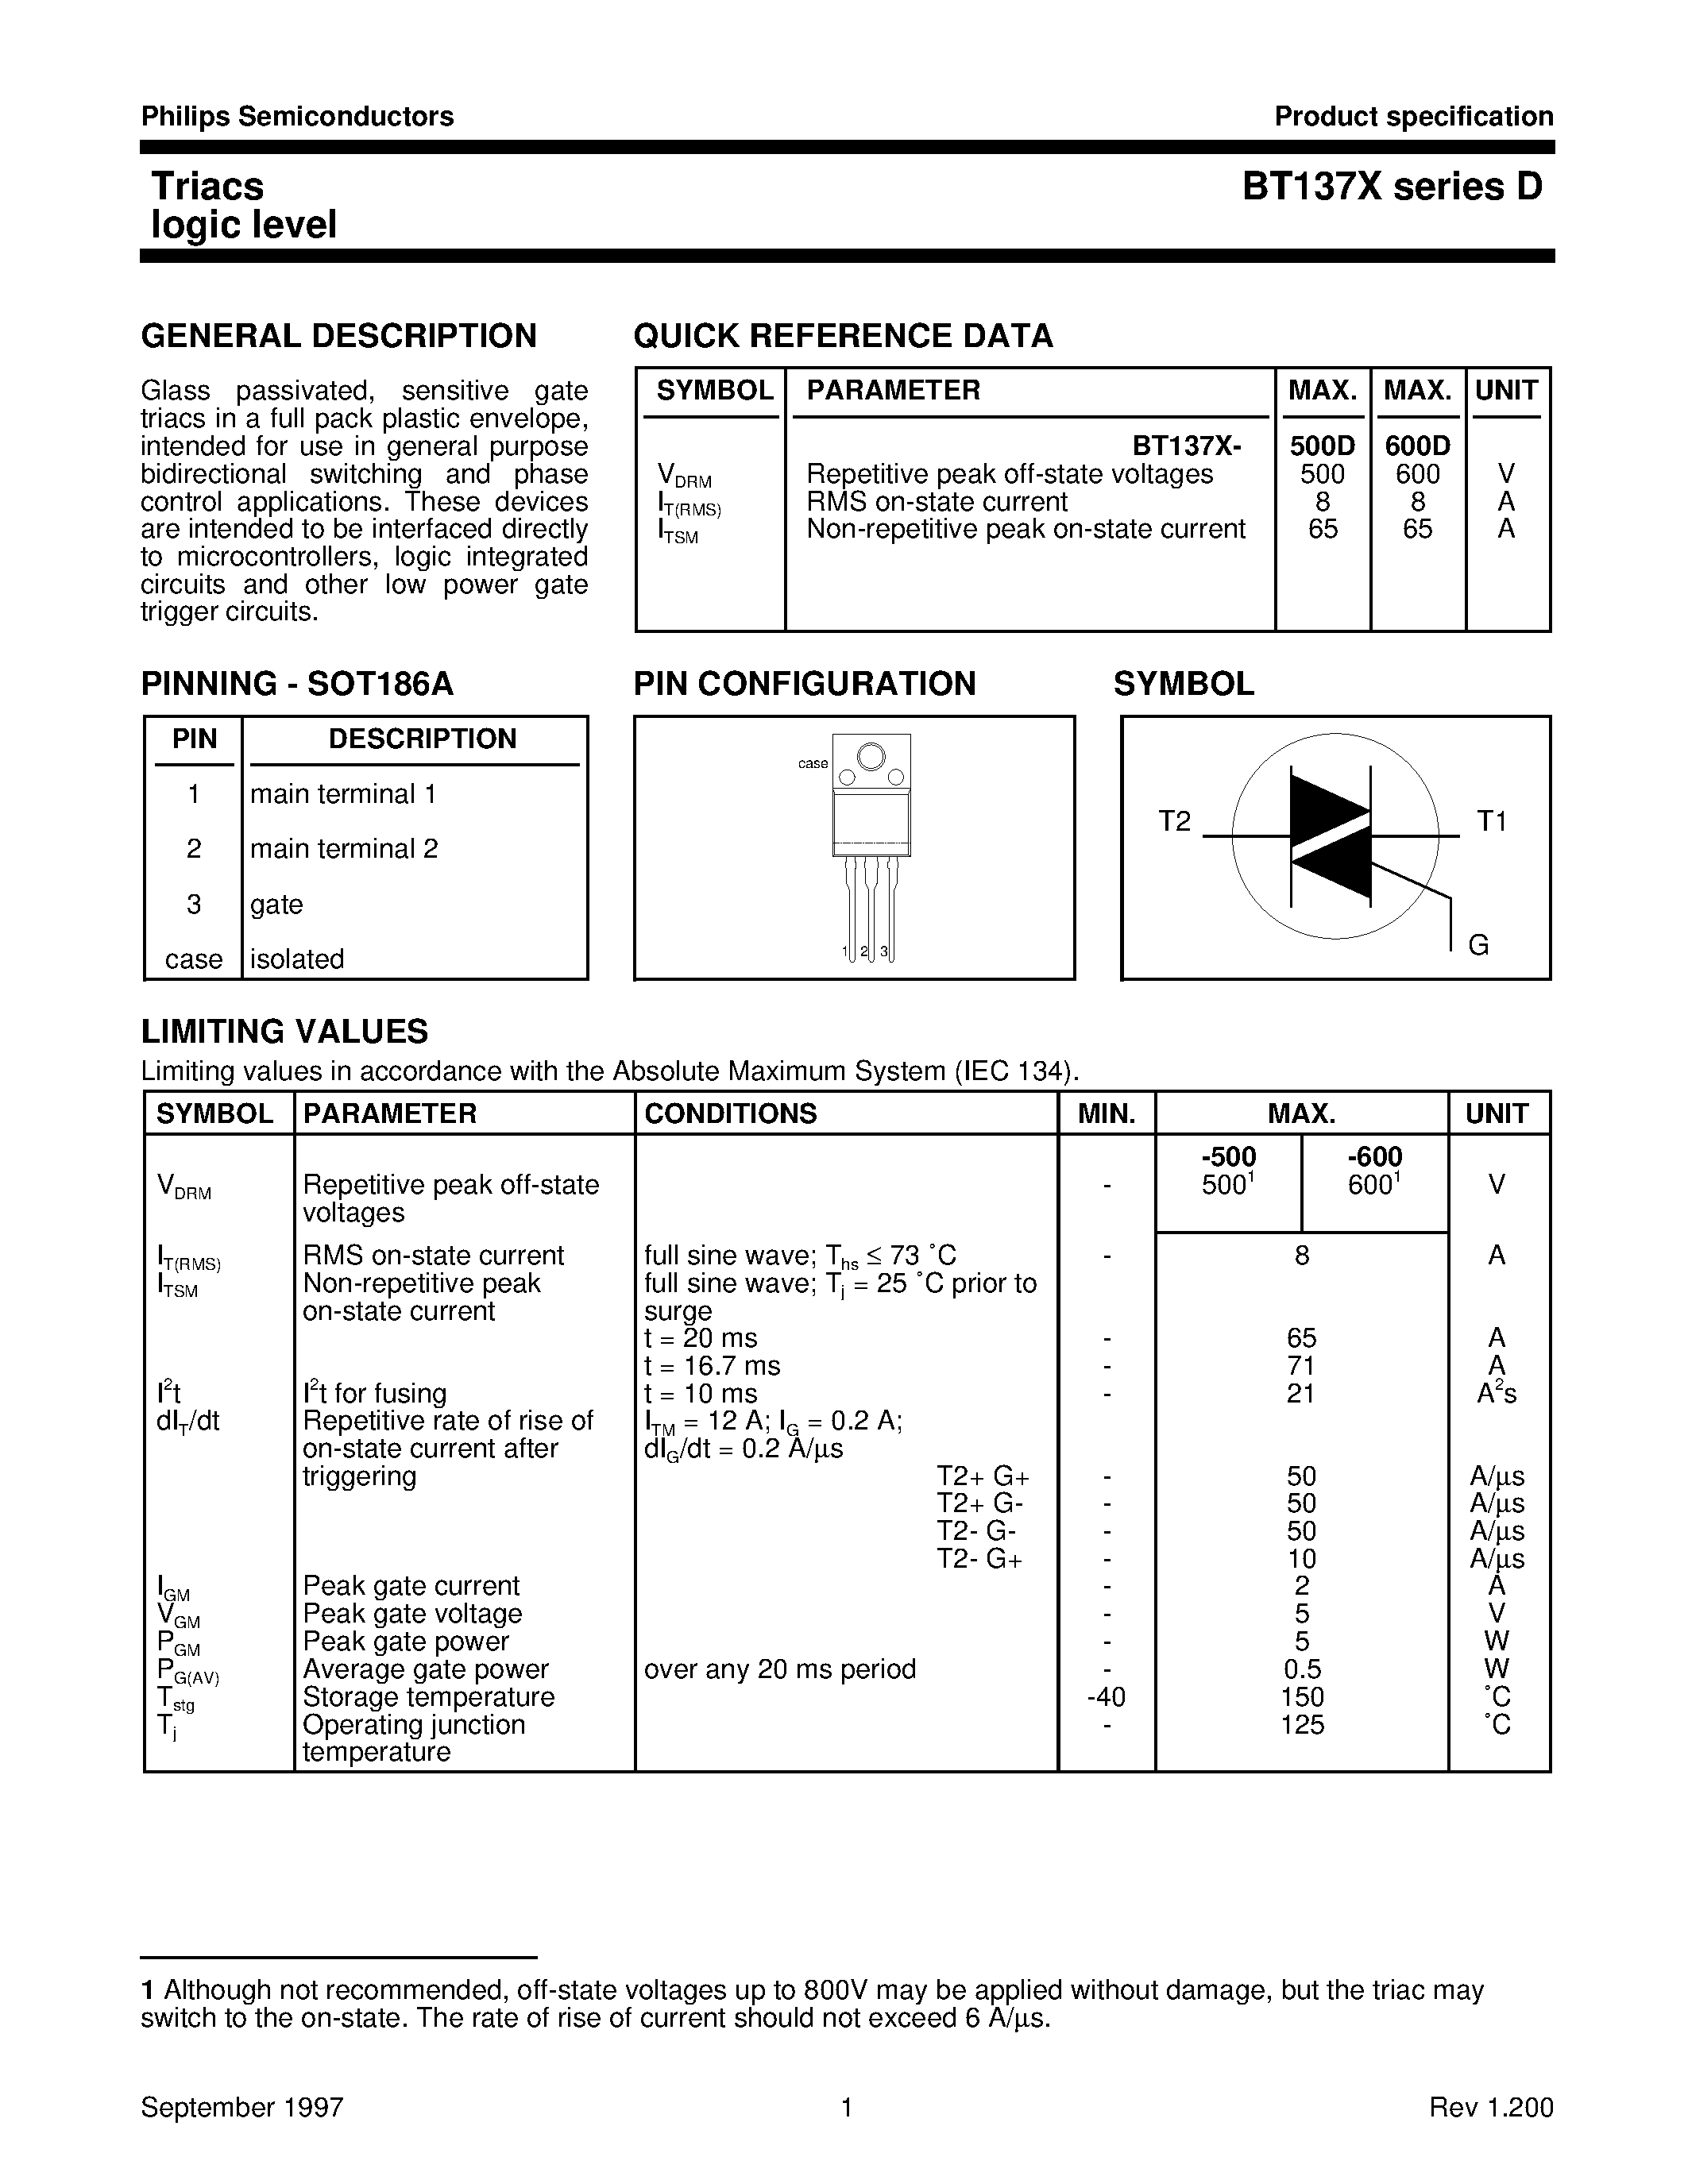 Datasheet BT137X-600D - Triacs logic level page 1